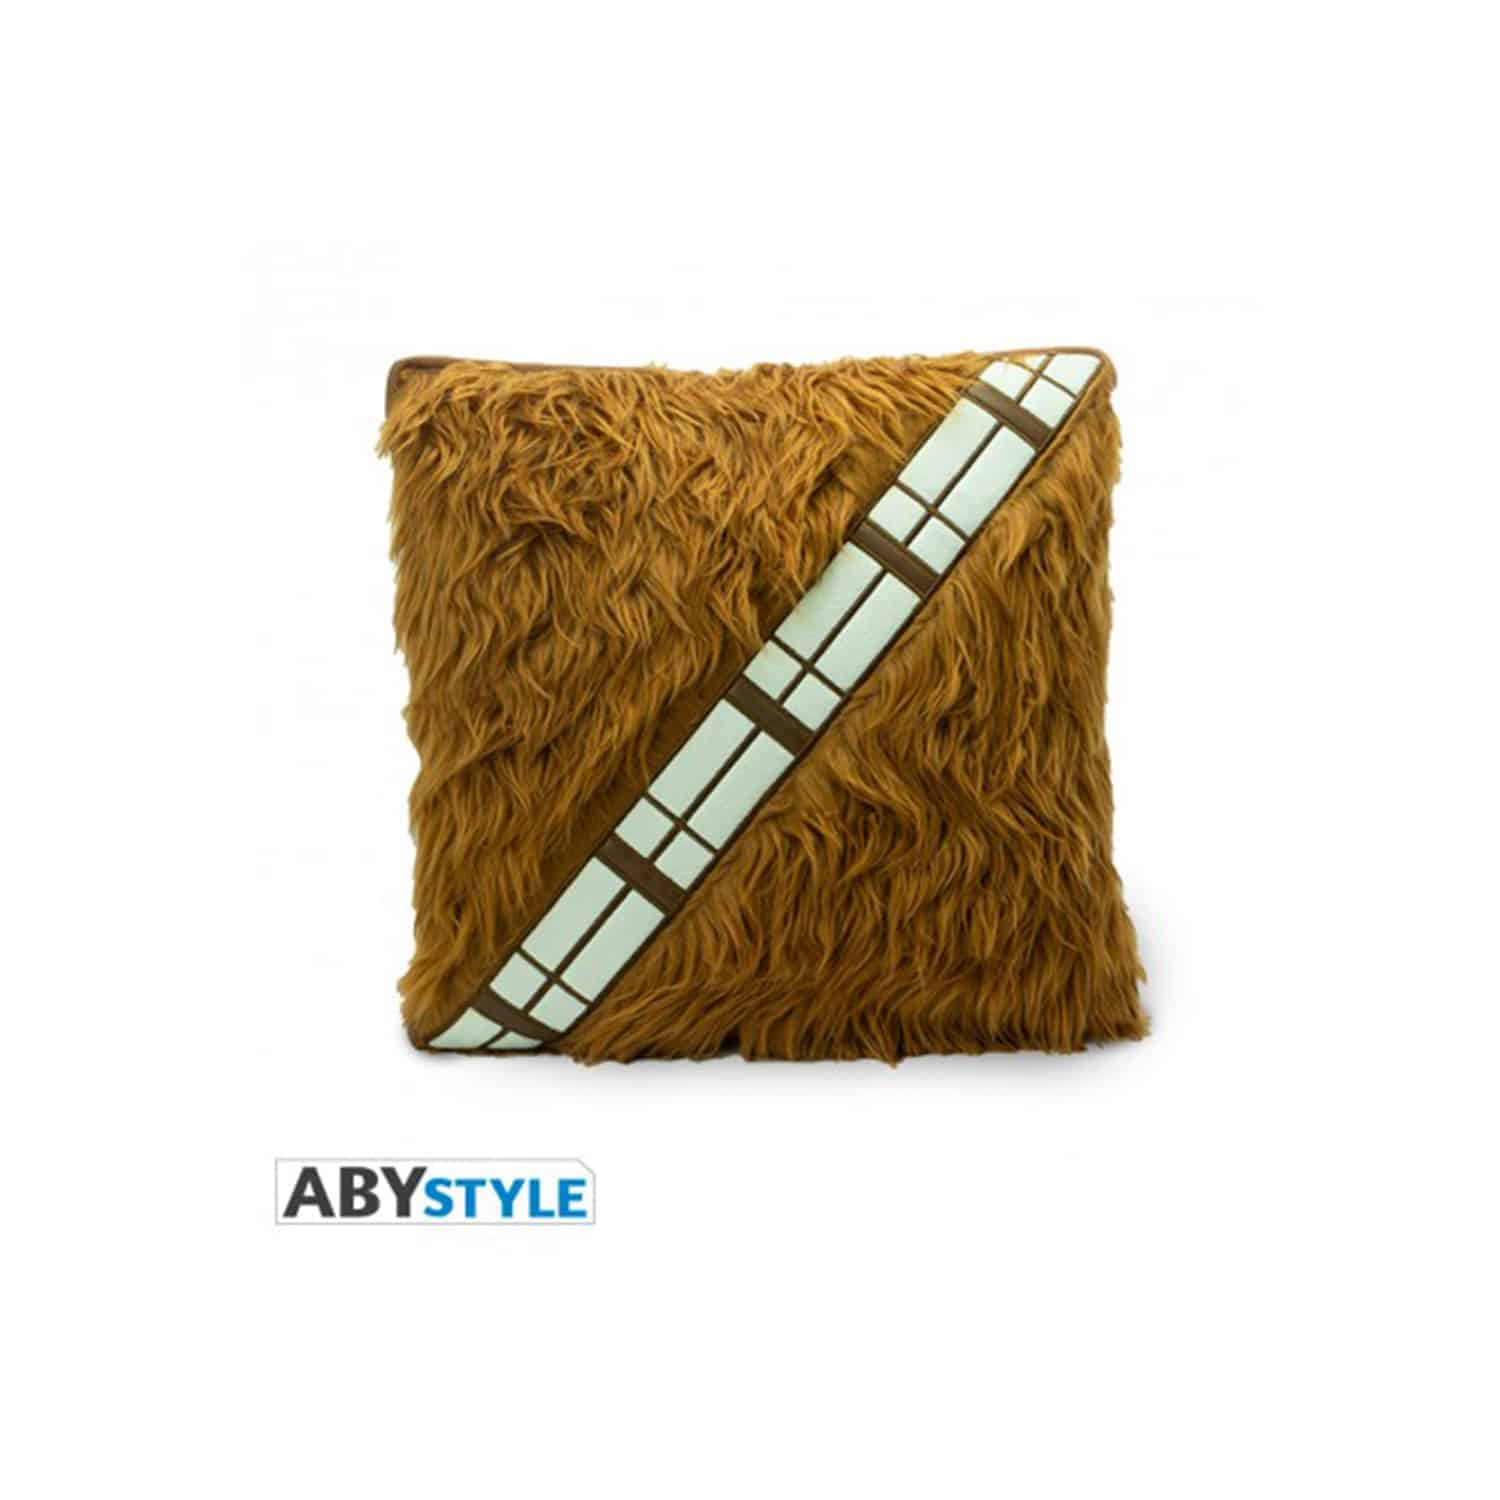 Star Wars - Chewbacca Cushion